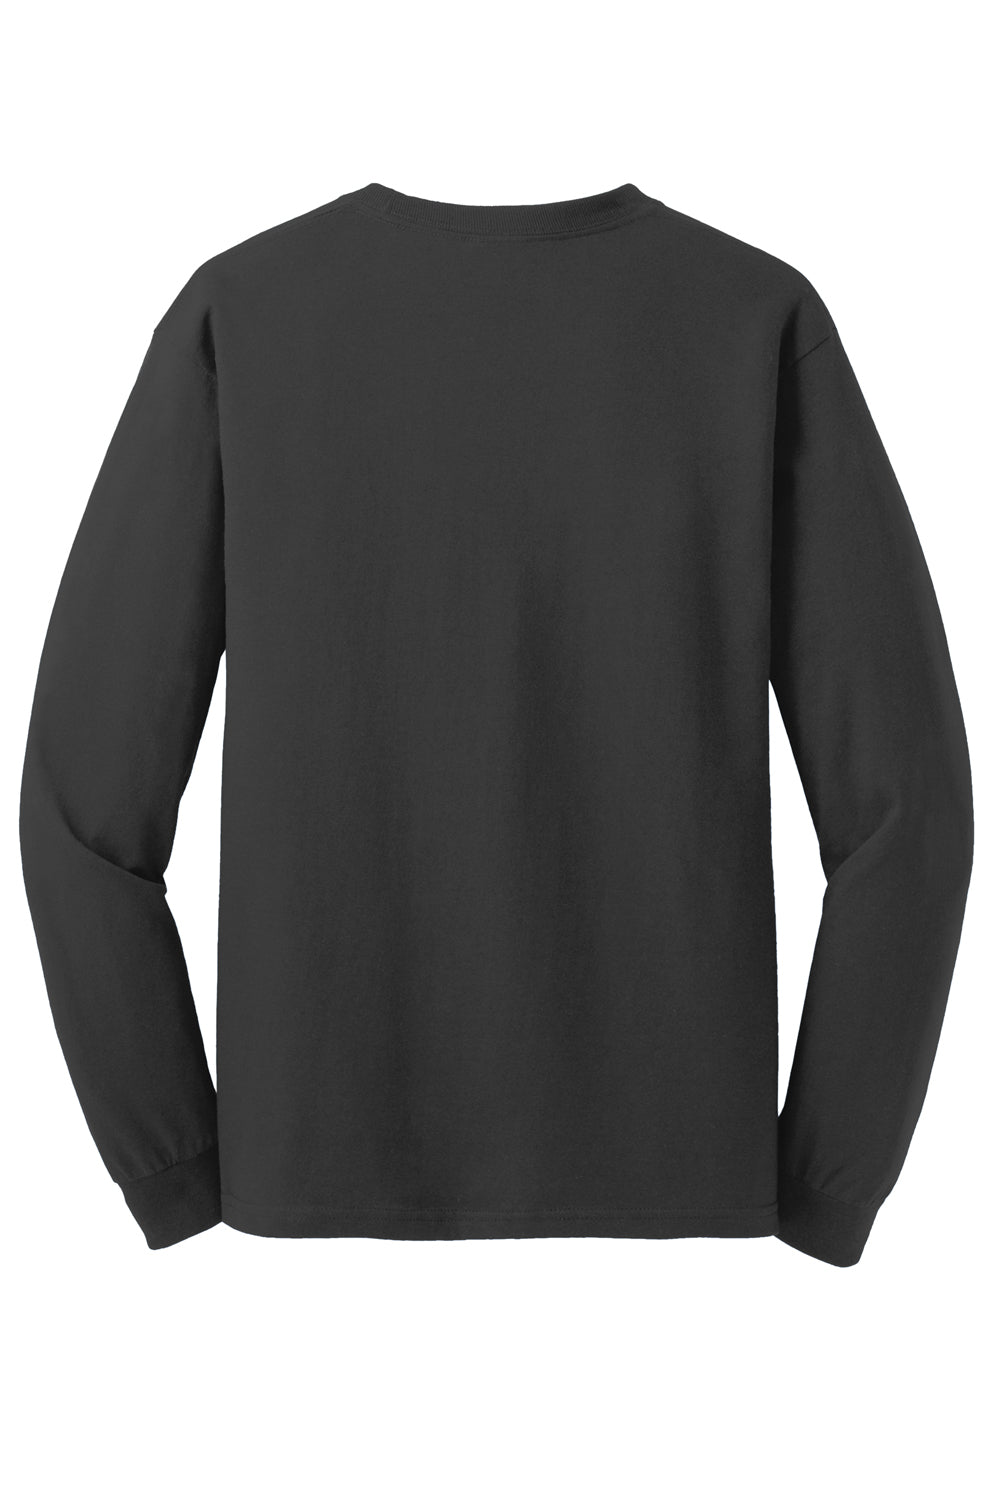 Gildan Mens Long Sleeve Crewneck T-Shirt Charcoal Grey Flat Back